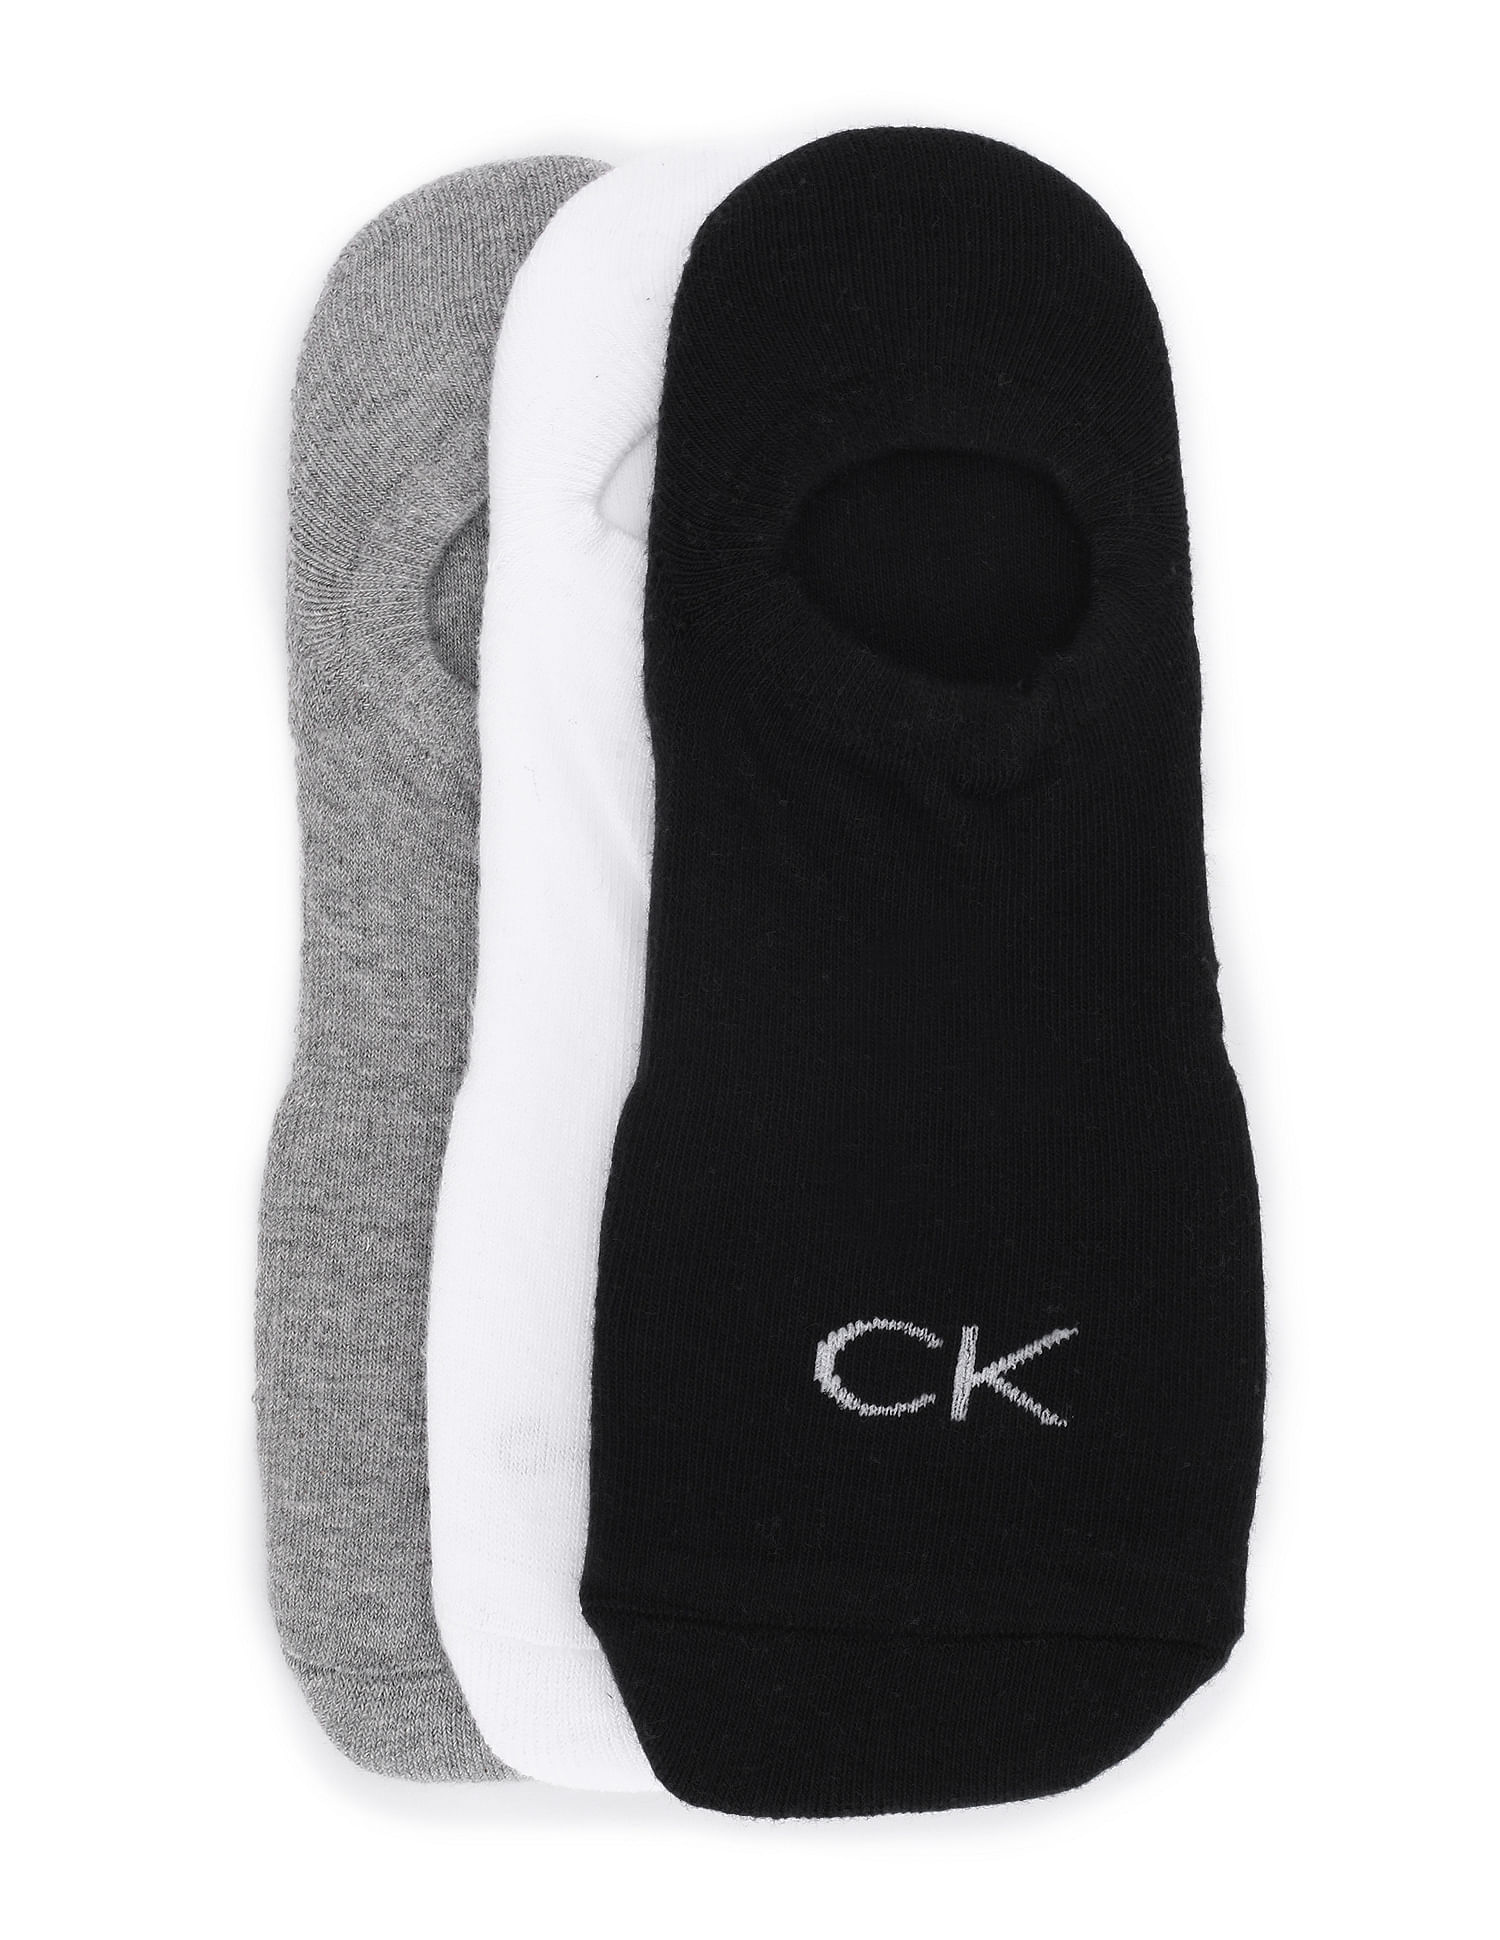 Microfiber Mesh 3-Pack Liner Socks | Calvin Klein